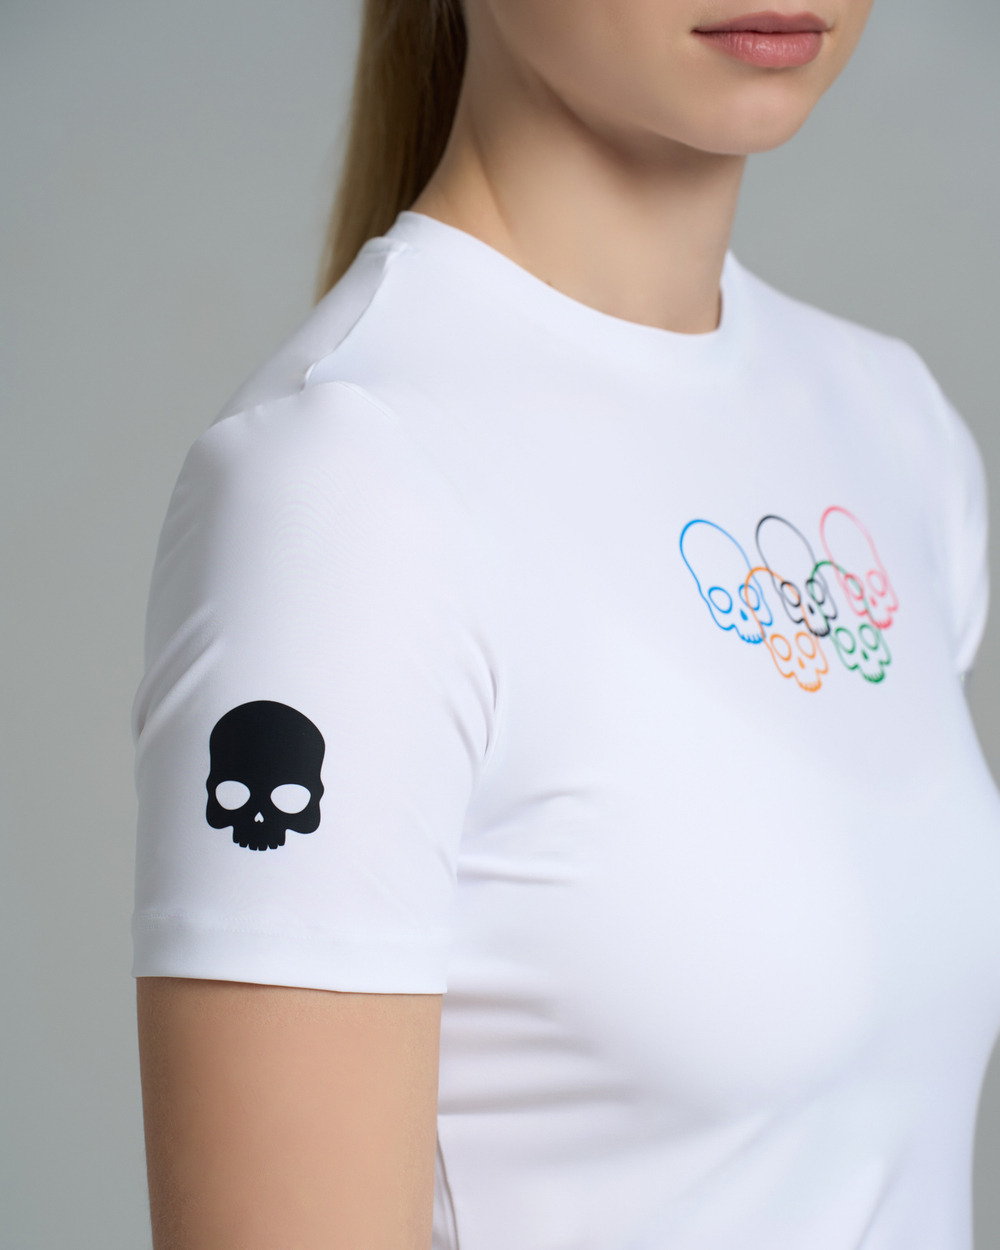 Женская футболка Hydrogen OLYMPIC SKULLS TECH T-SHIRT (T01822-001)